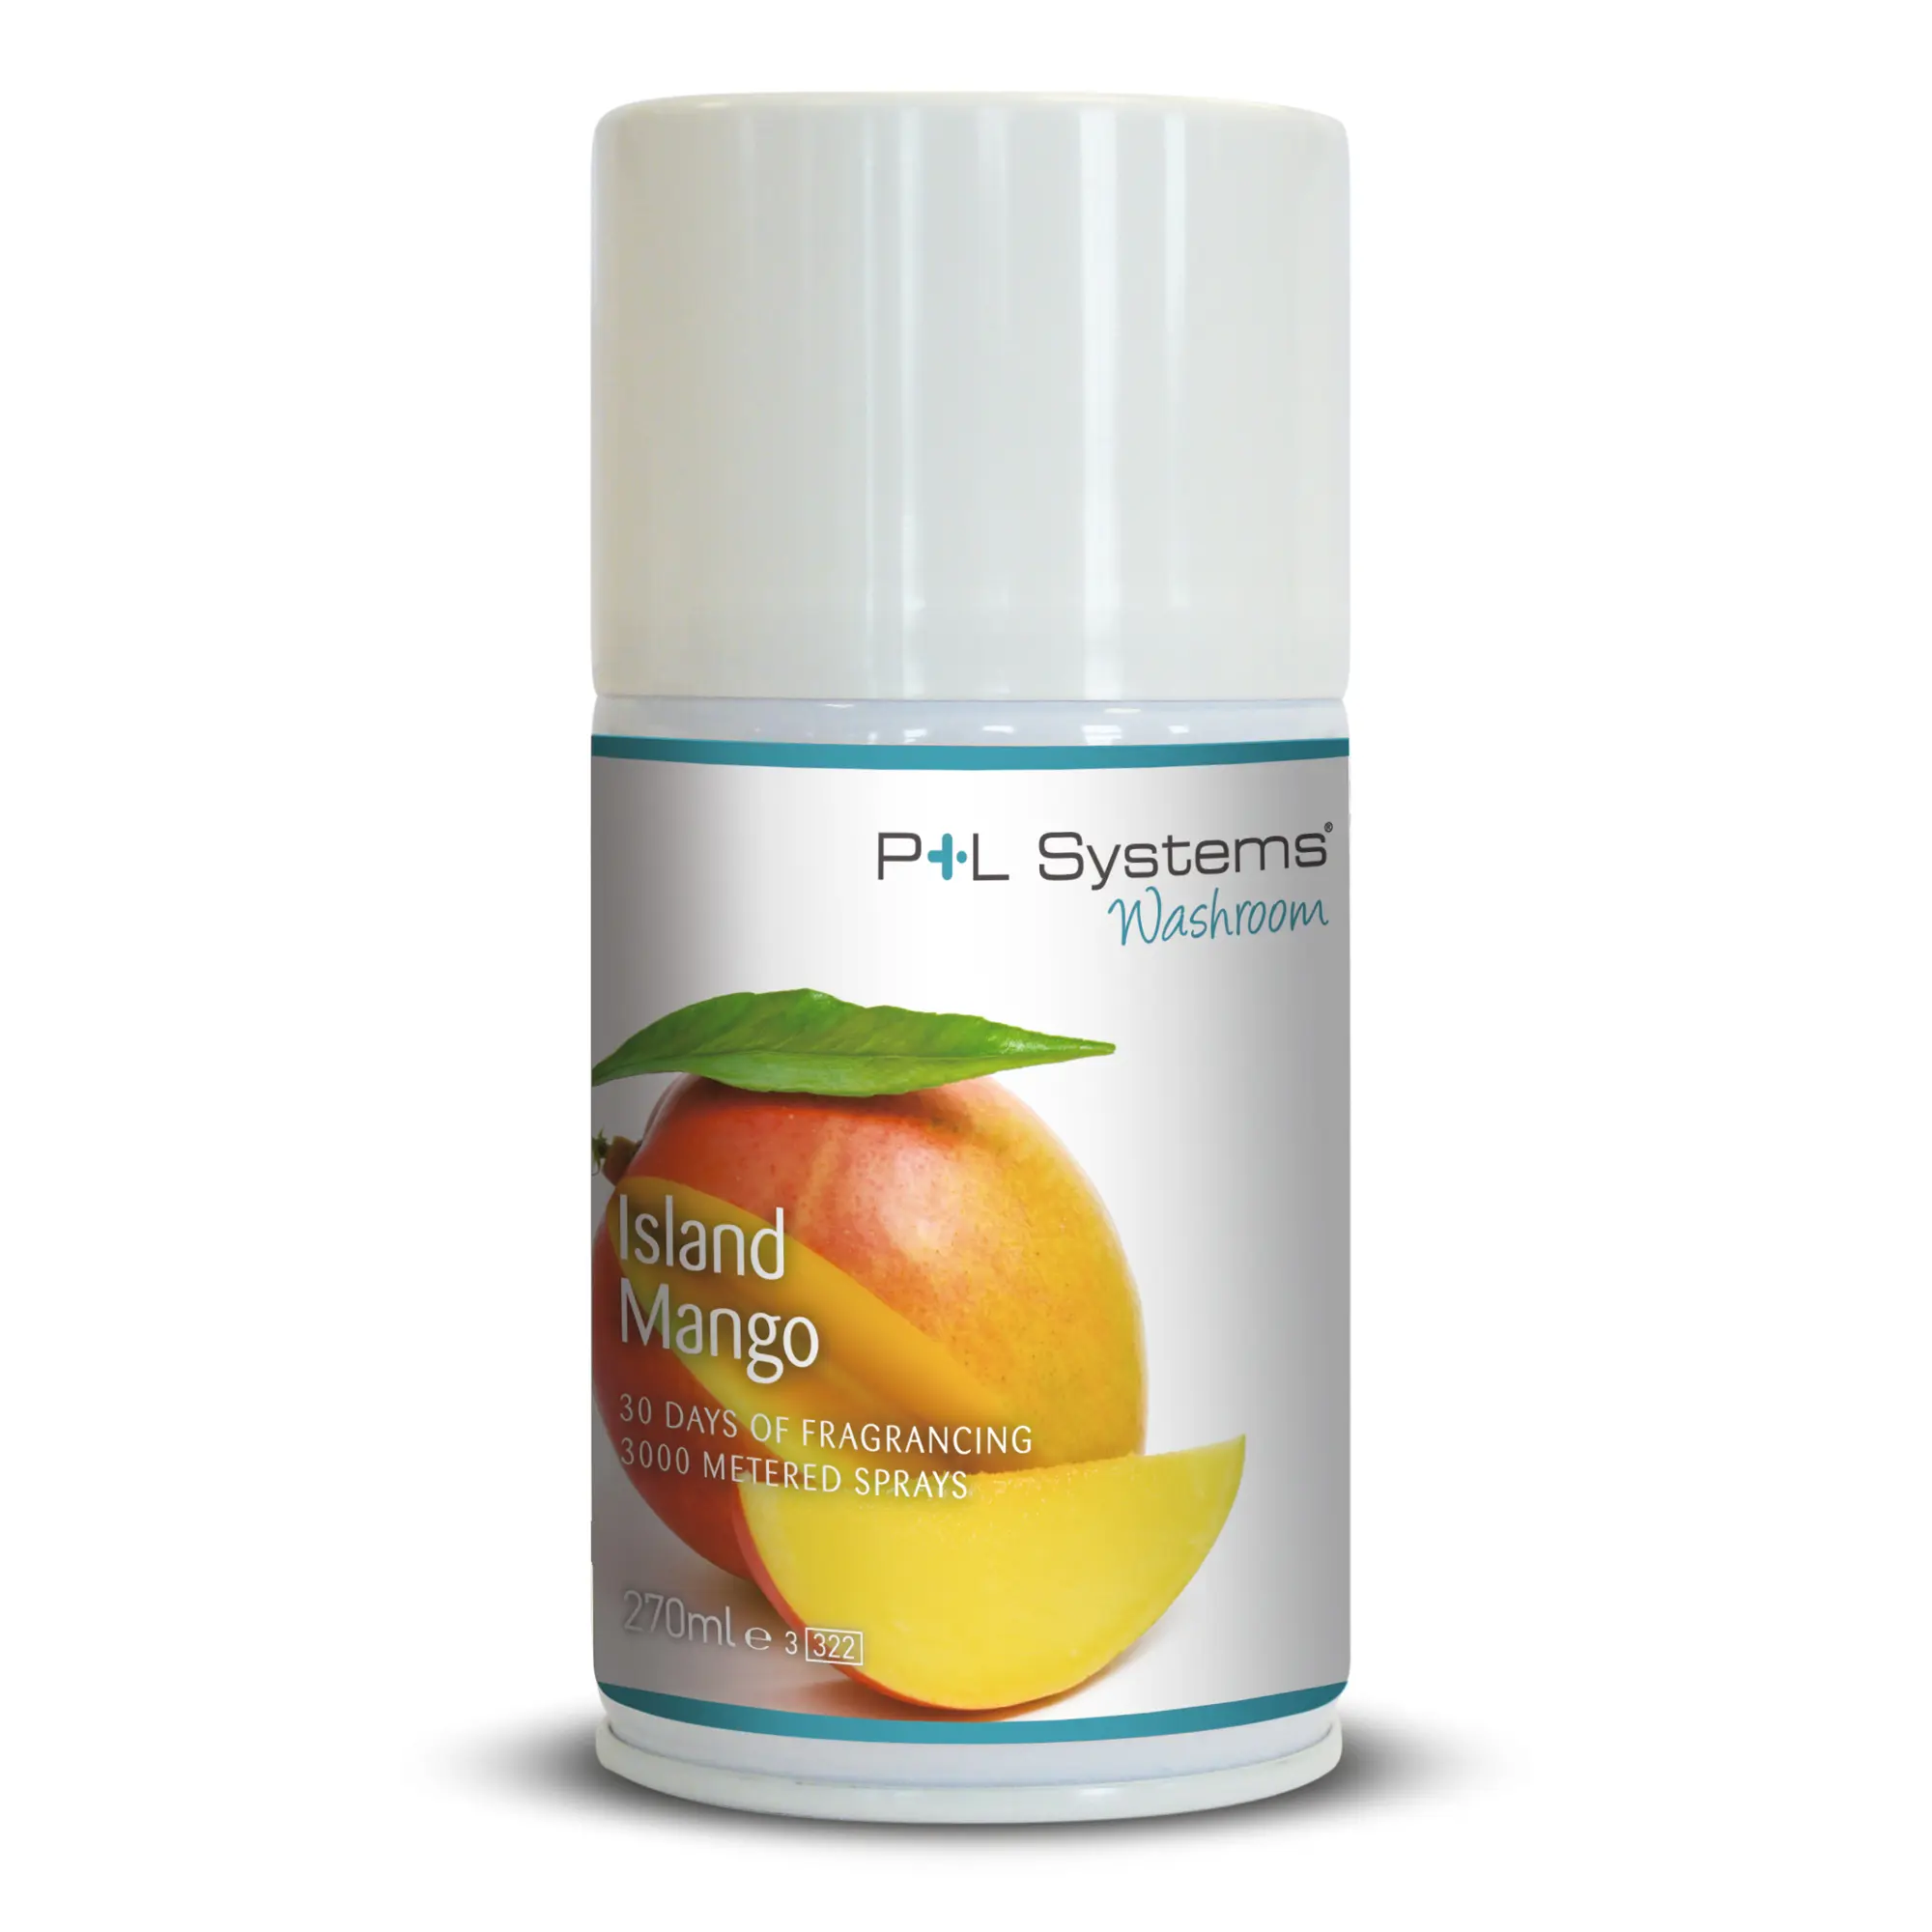 P+L Systems Duftdose Time-Mist 270 ml Microspray Island Mango W206_1